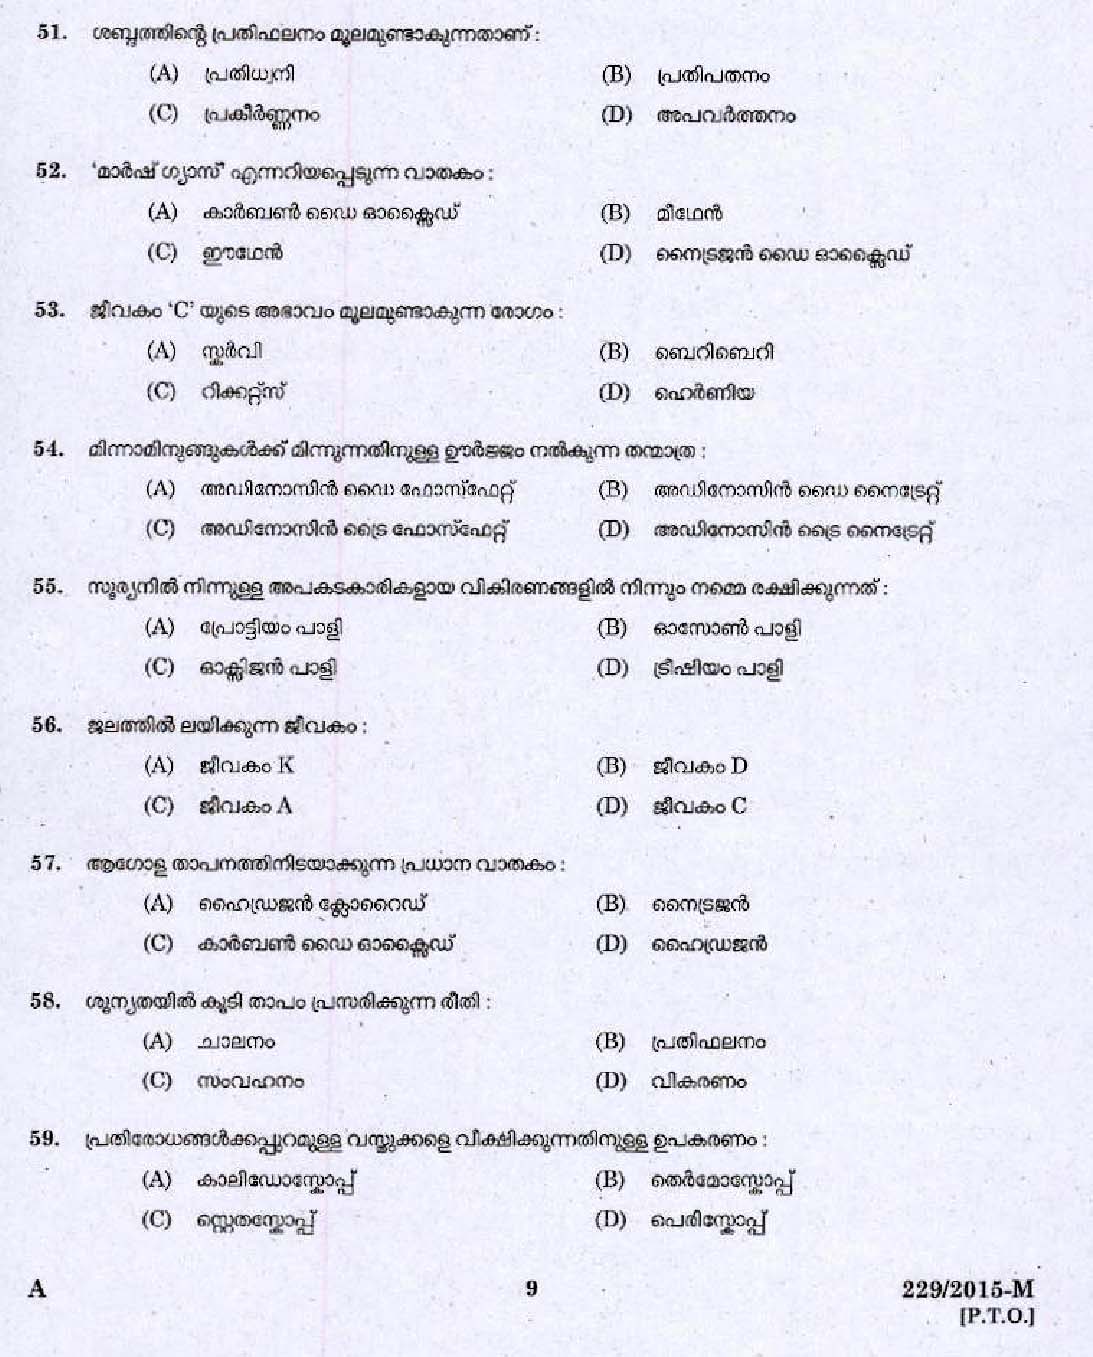 Kerala PSC Seaman Exam 2015 Question Paper Code 2292015 M 7